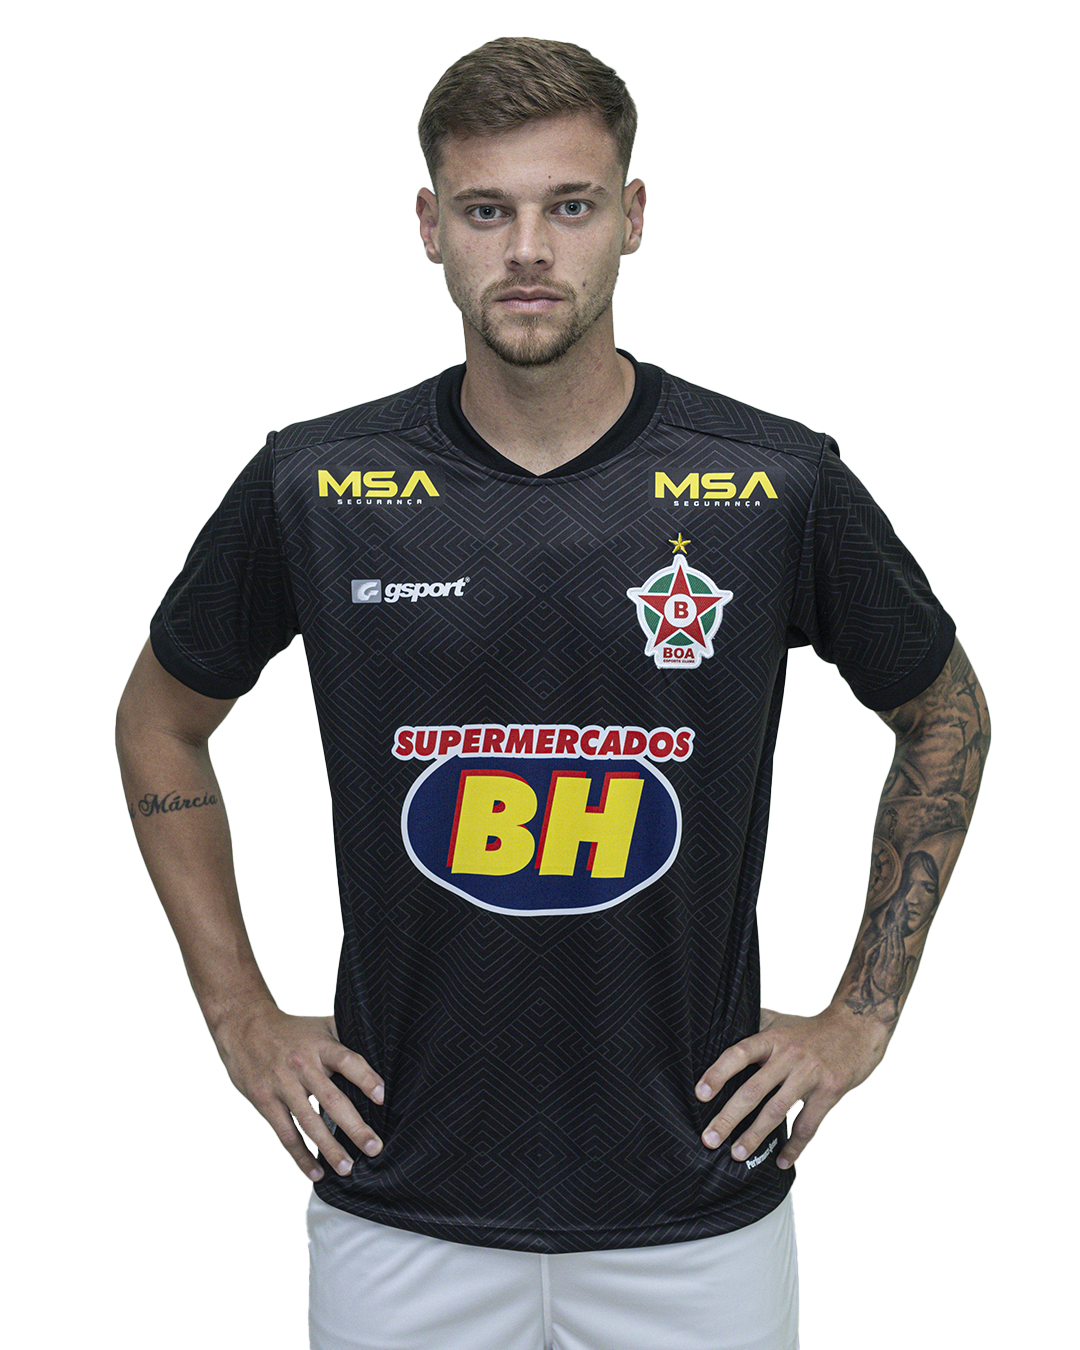 Bruno Henrique - 24 anos